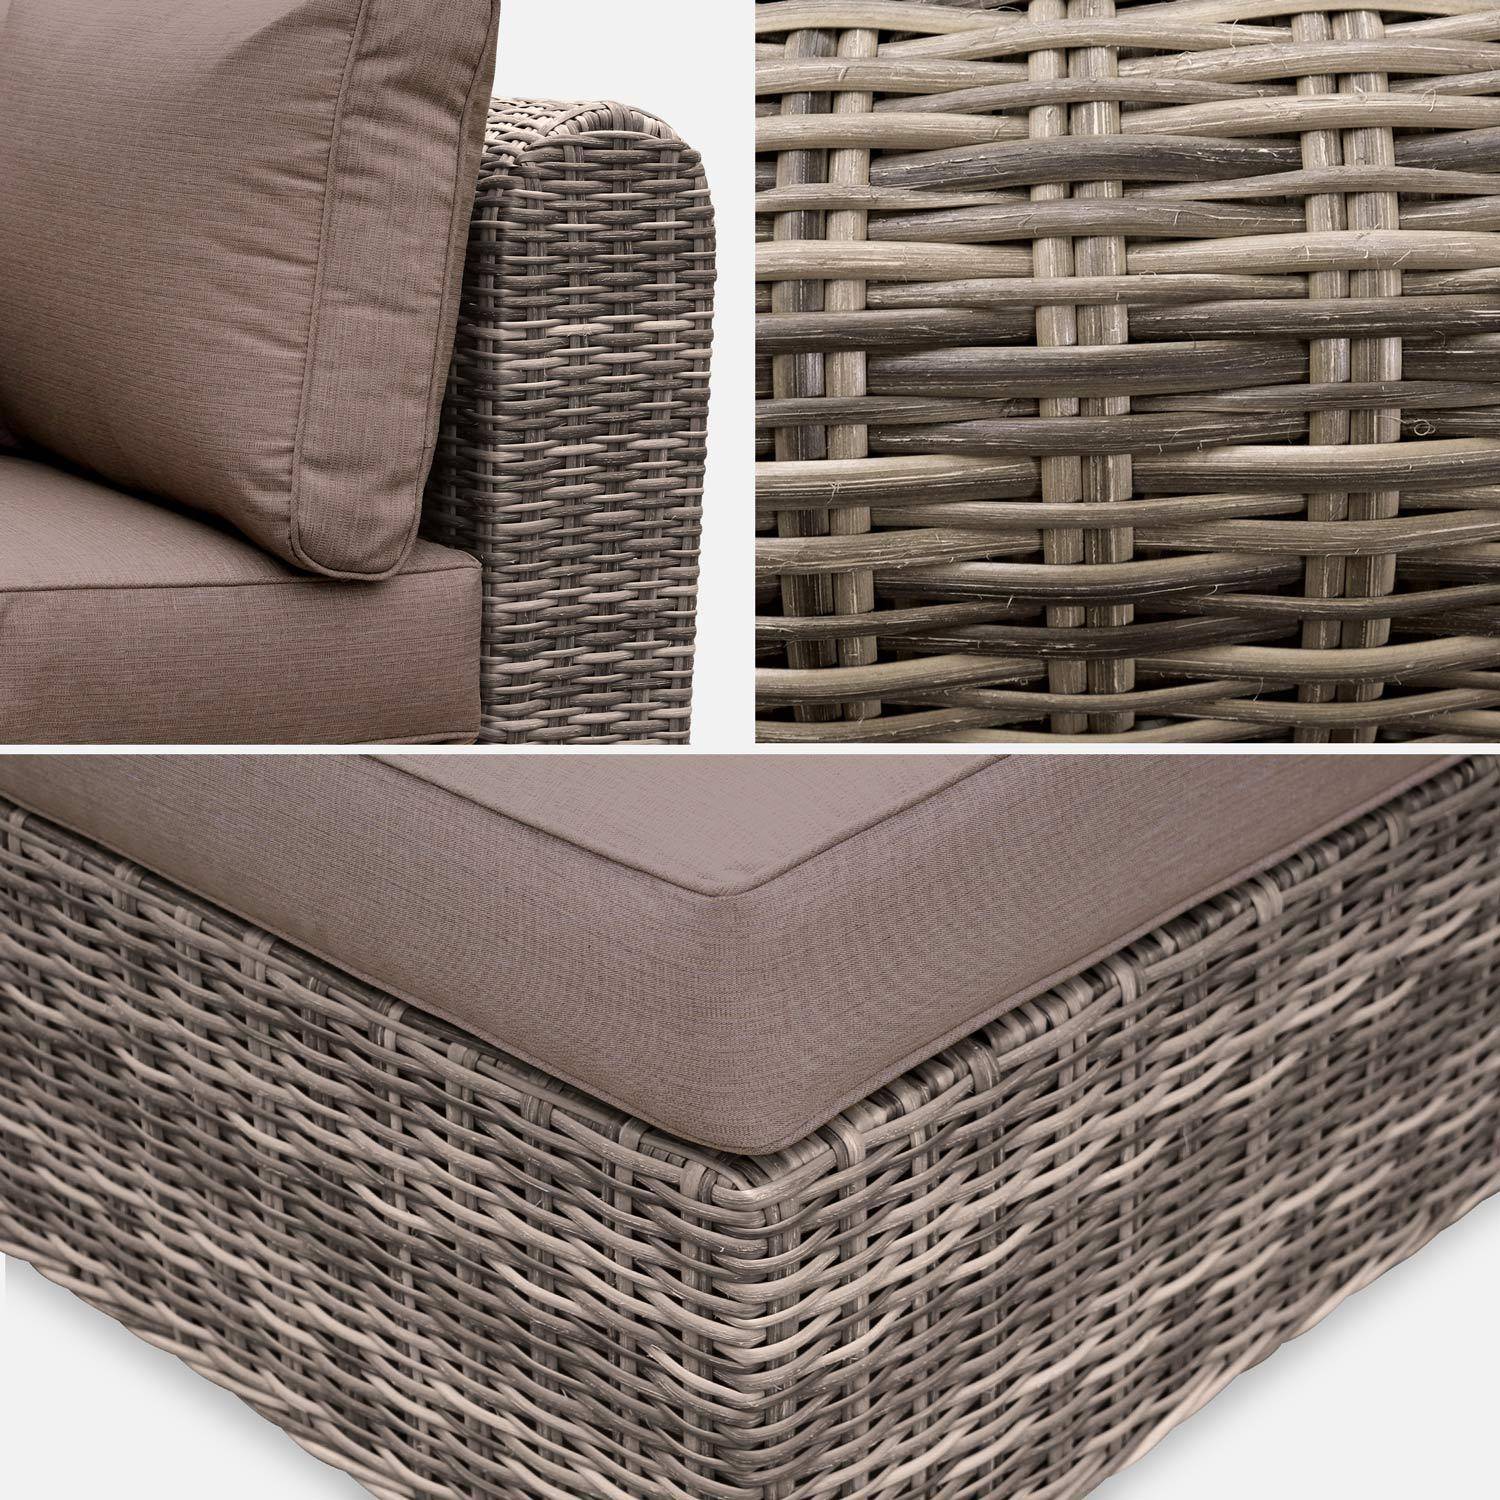 5-seater round rattan garden sofa set - 3-seater sofa, 2 armchairs, 1 coffee table - Juliano - Beige Photo6